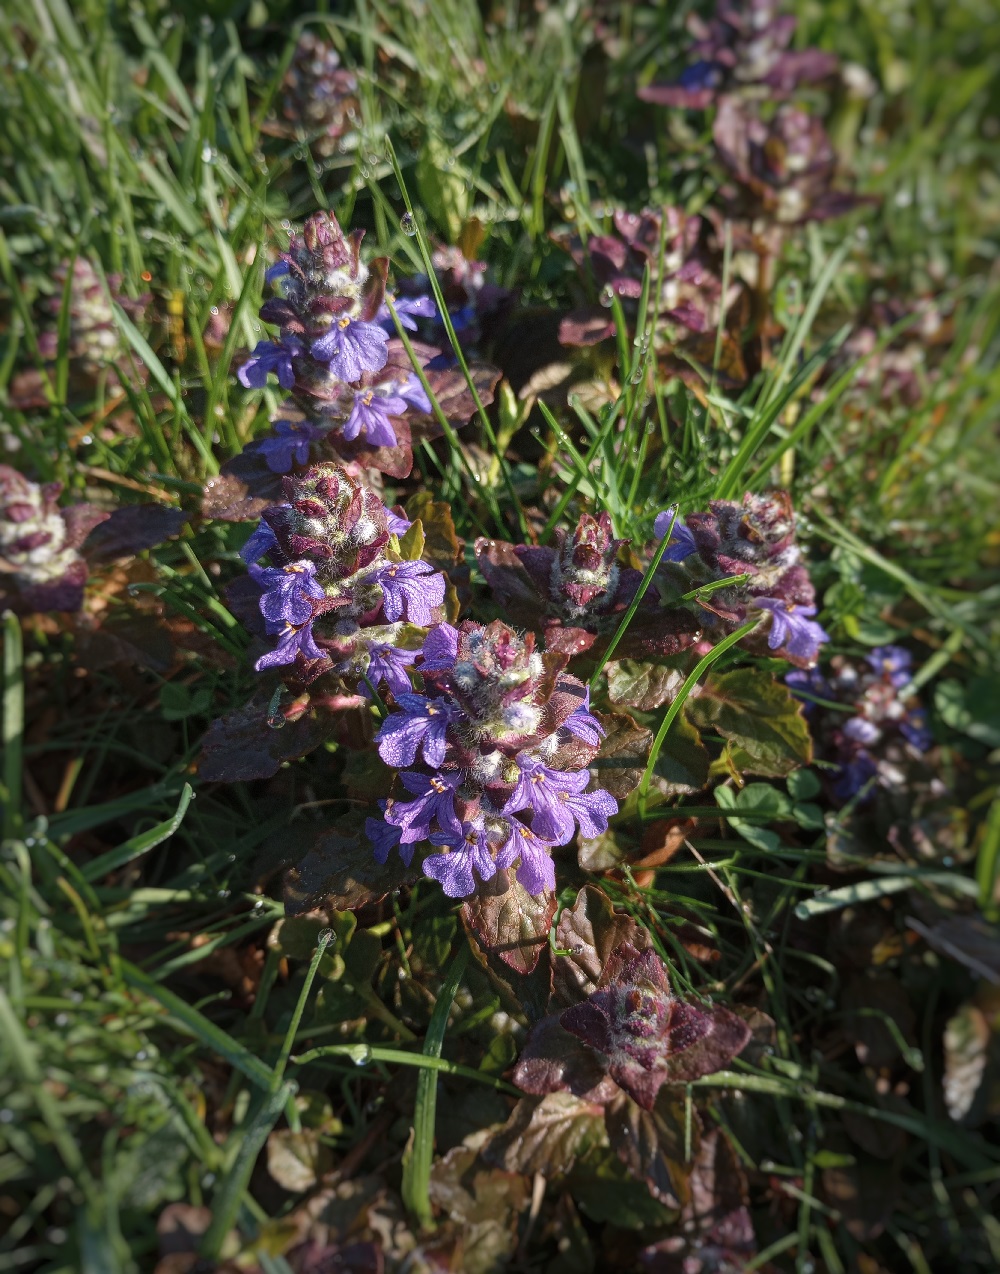 brownish purple leafy stalks with vibrant purple flowers near the top